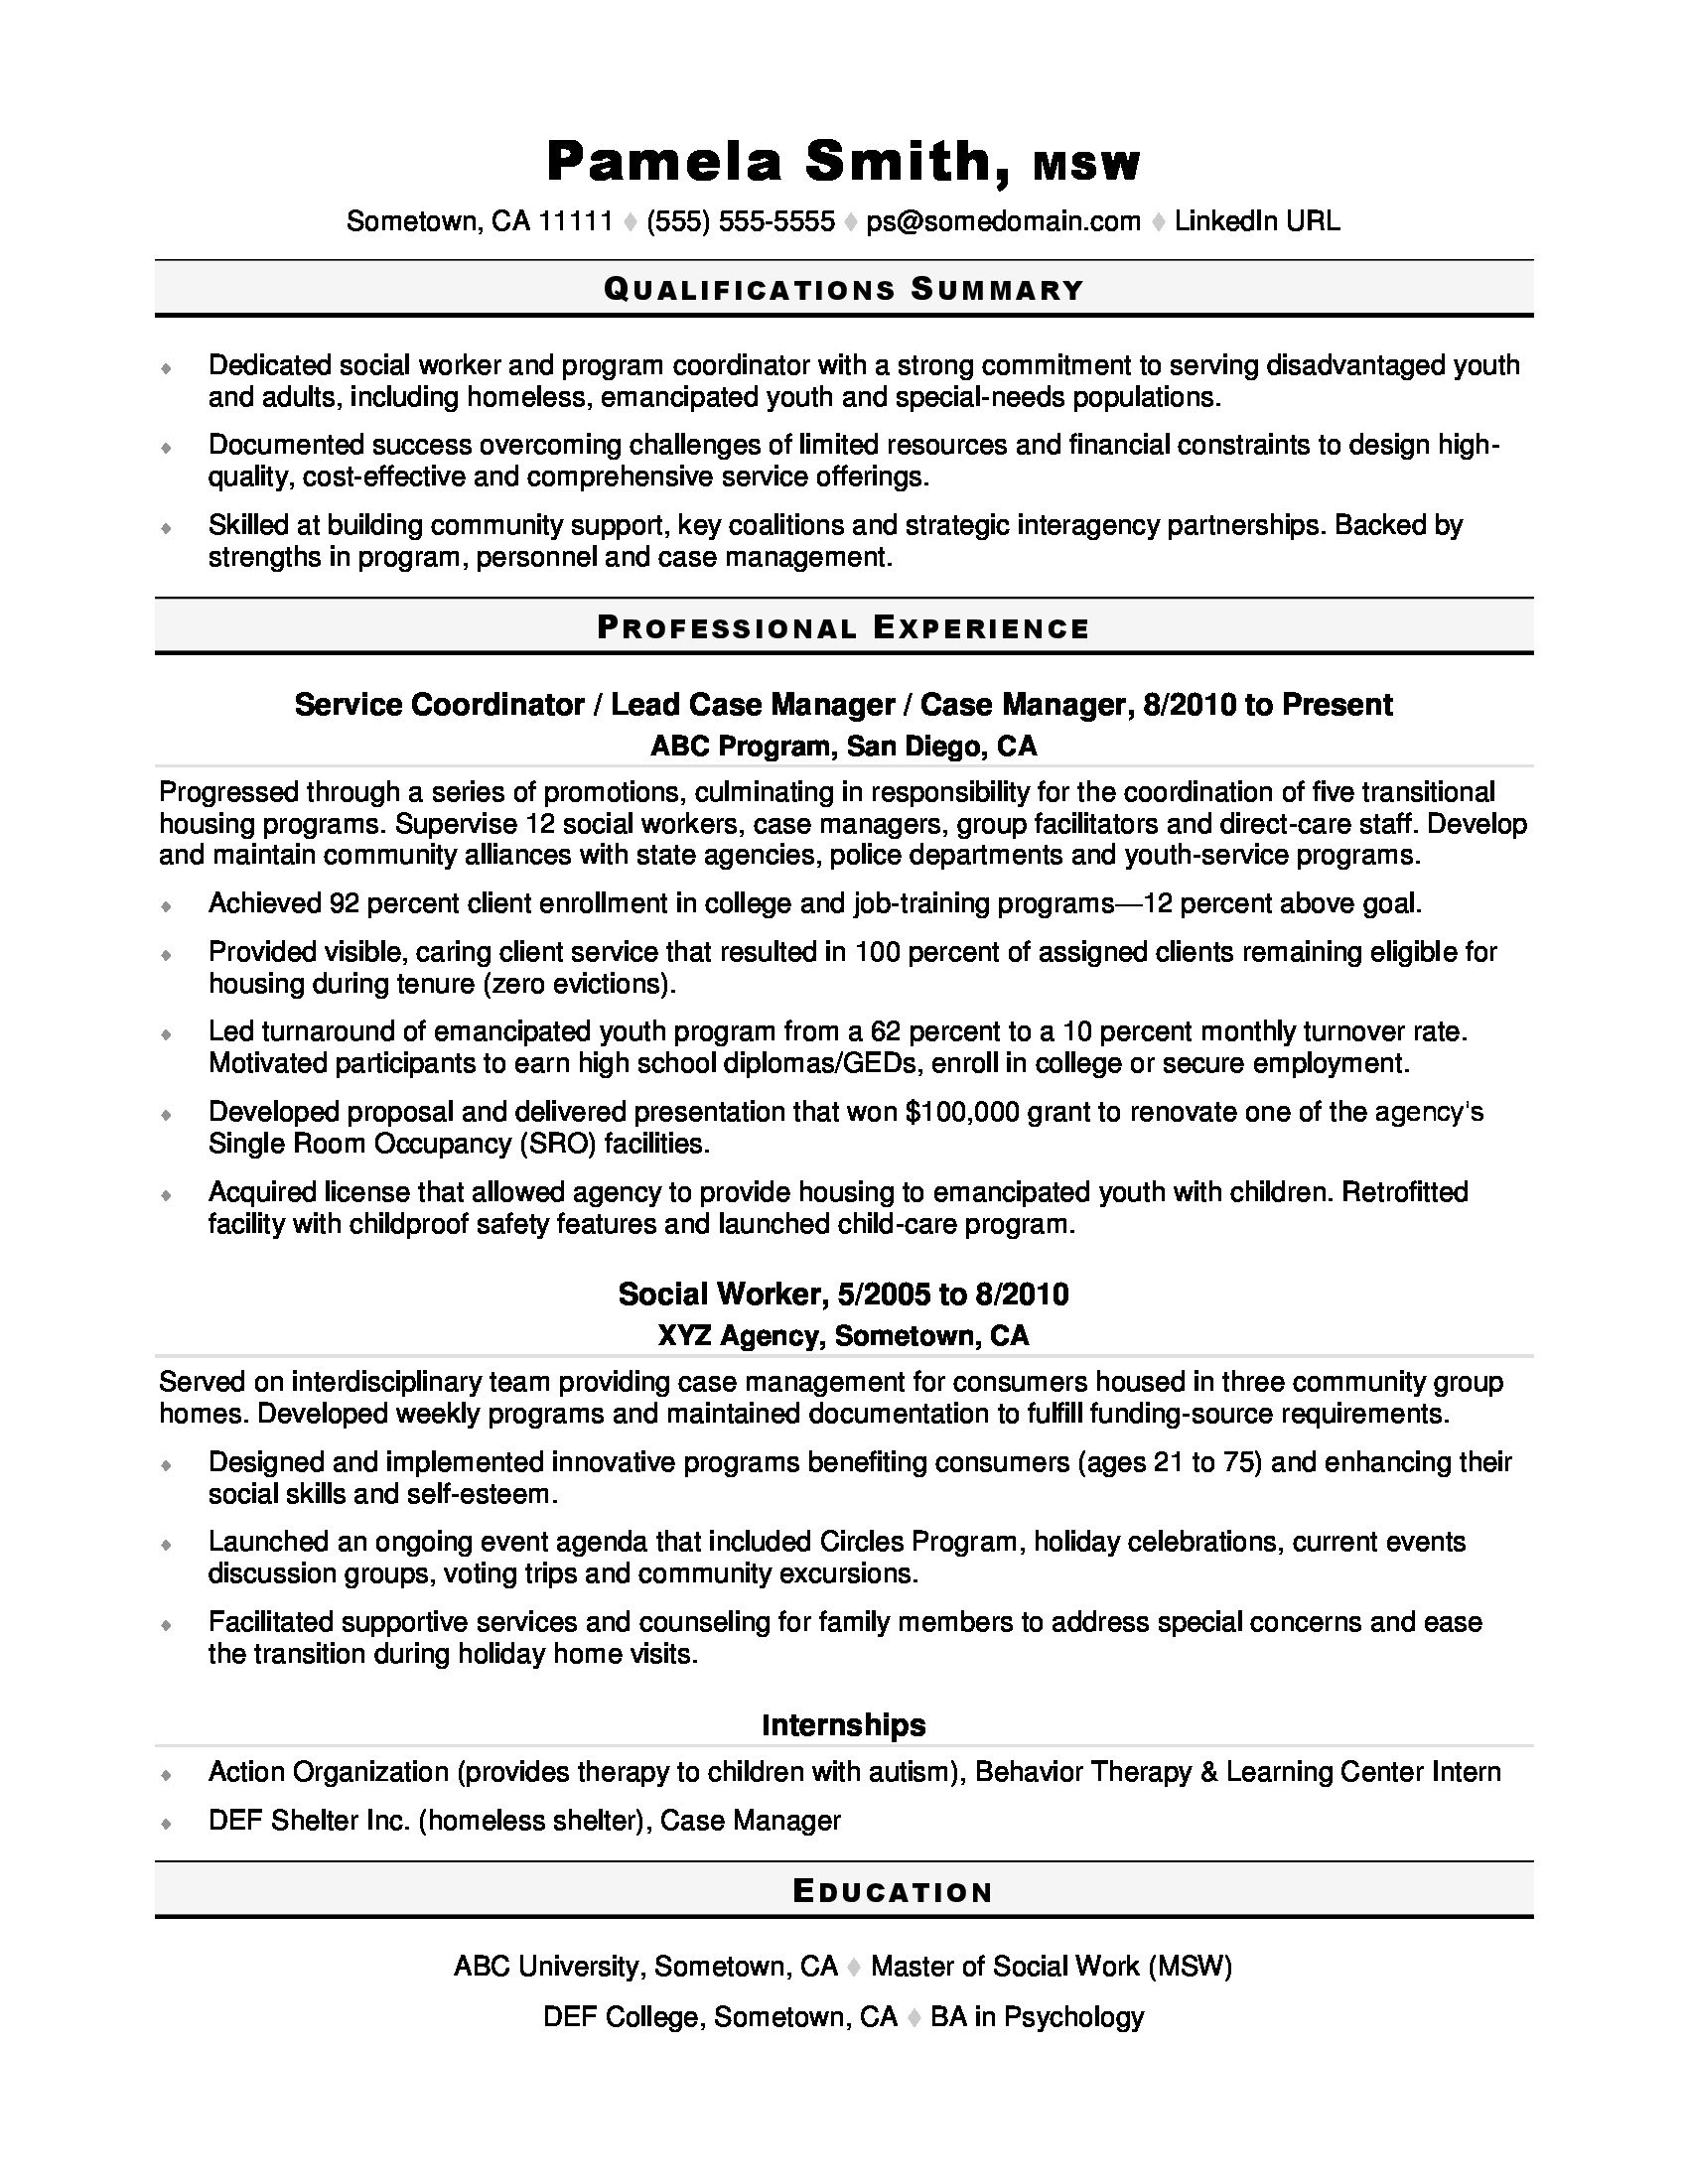 Resume Sample In Applying Job In California social Work Resume Monster.com